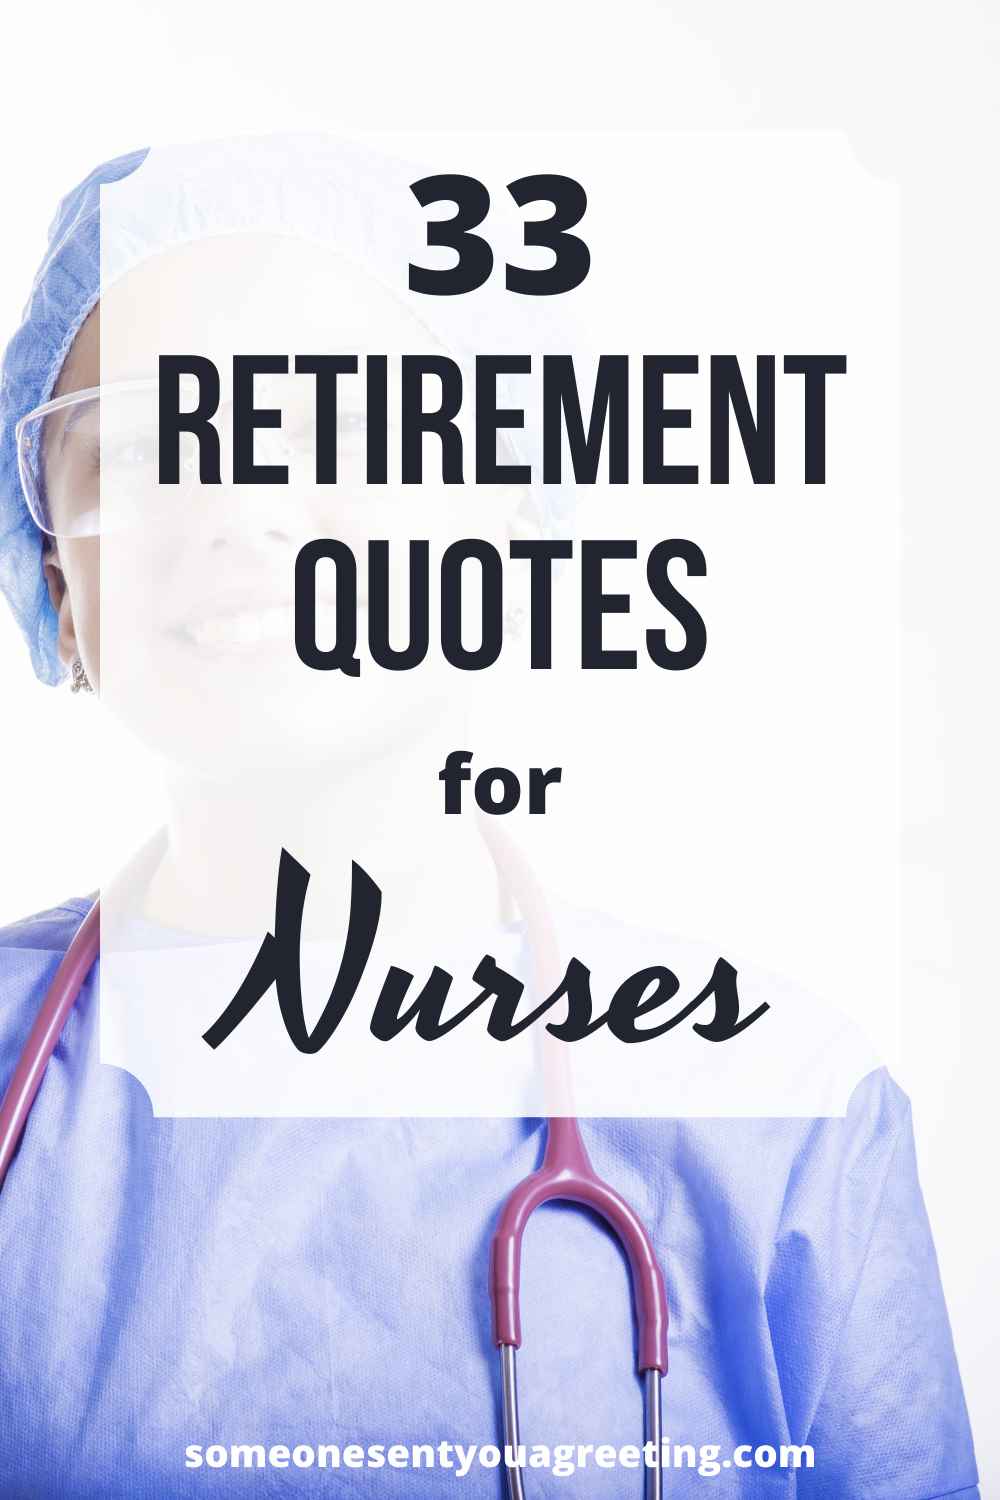 Retirement quotes for nurses